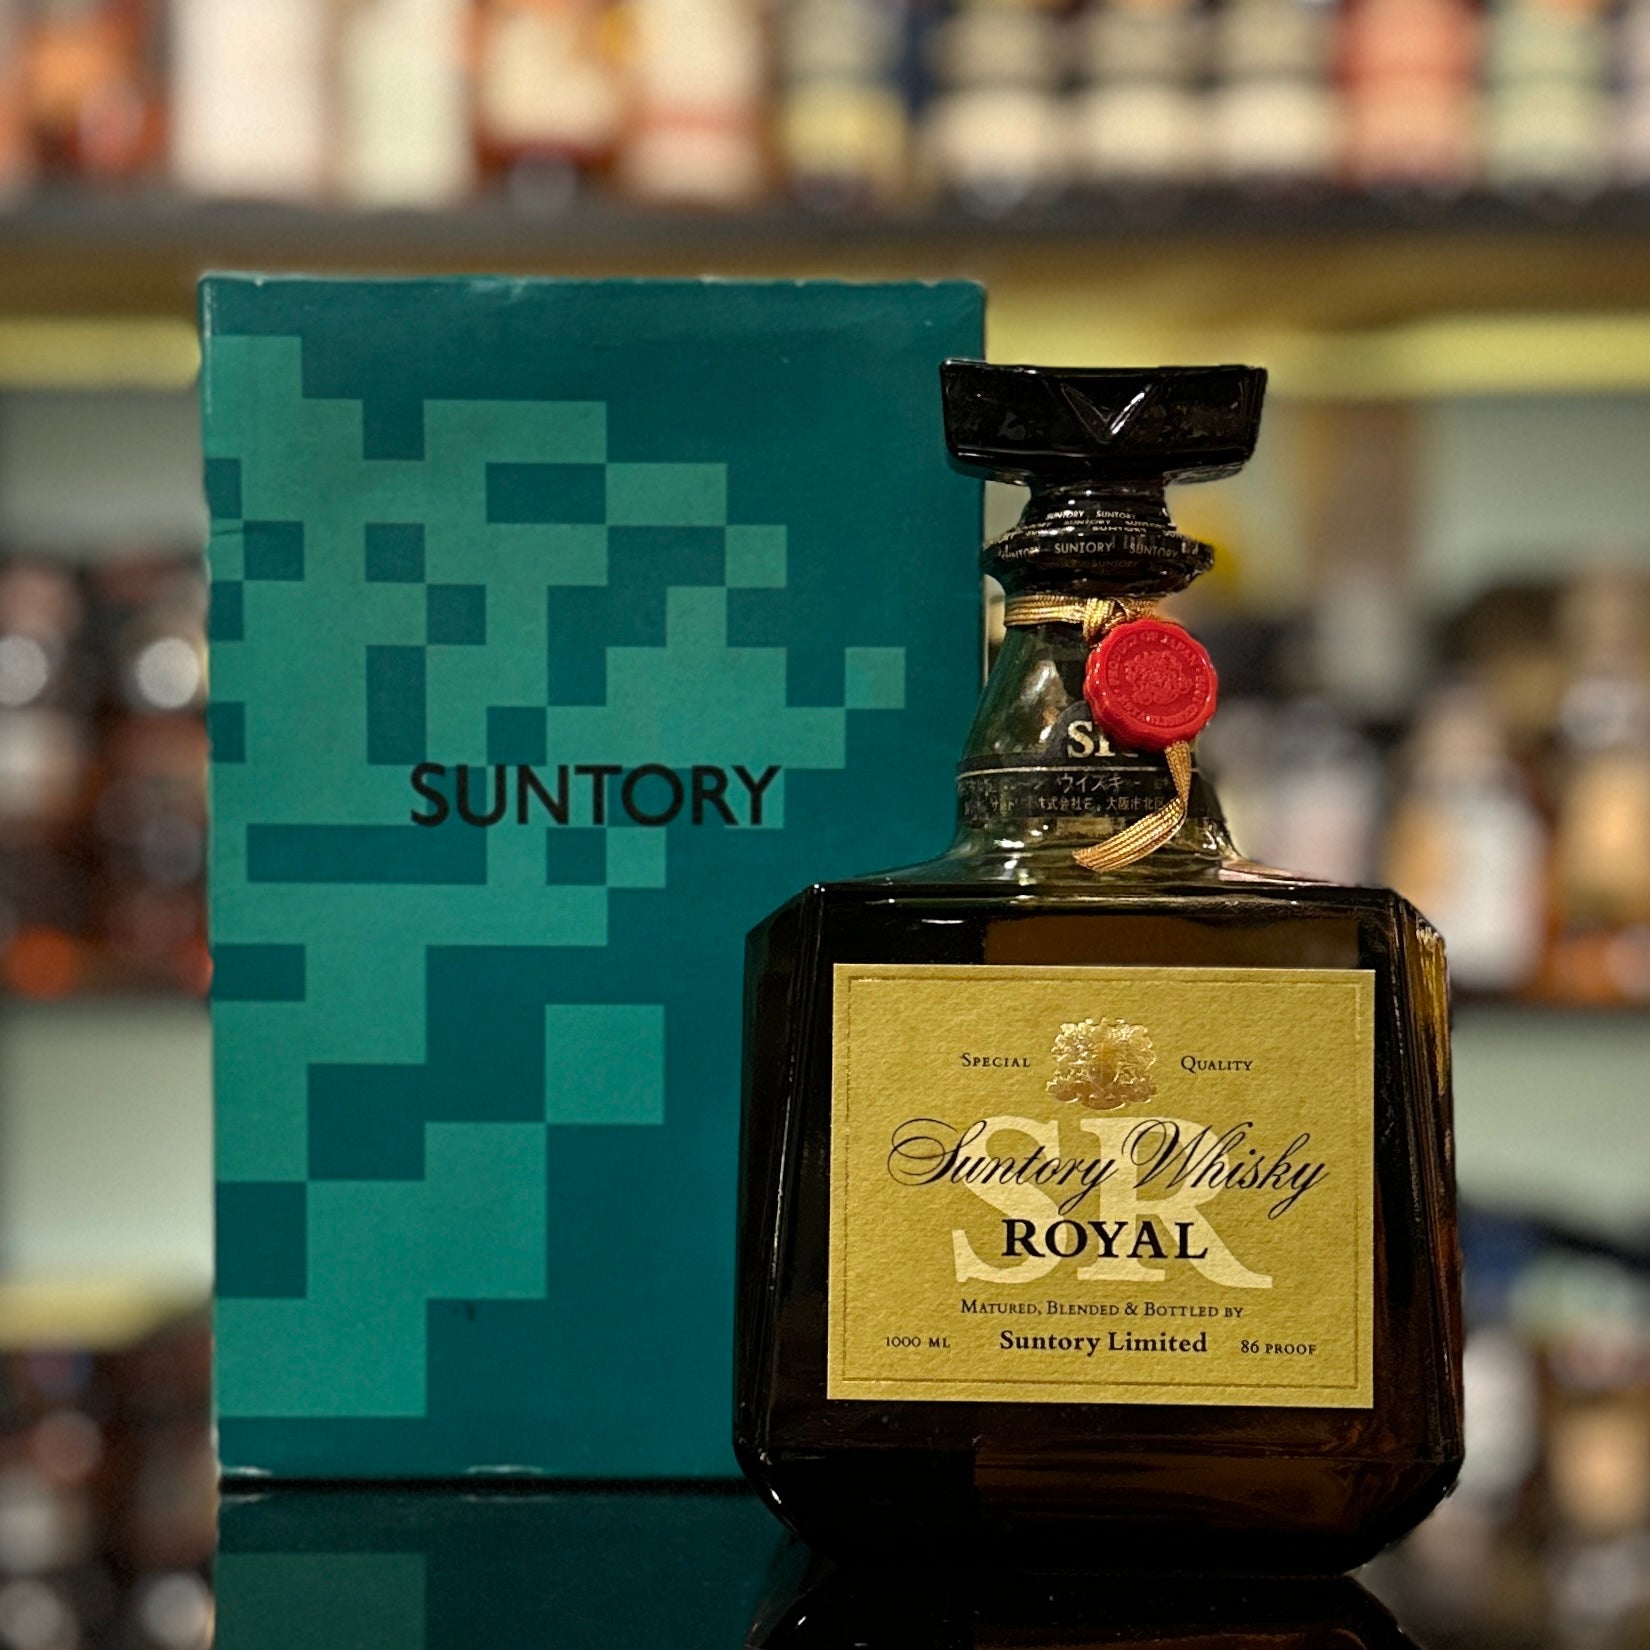 Suntory – The Central Whisky